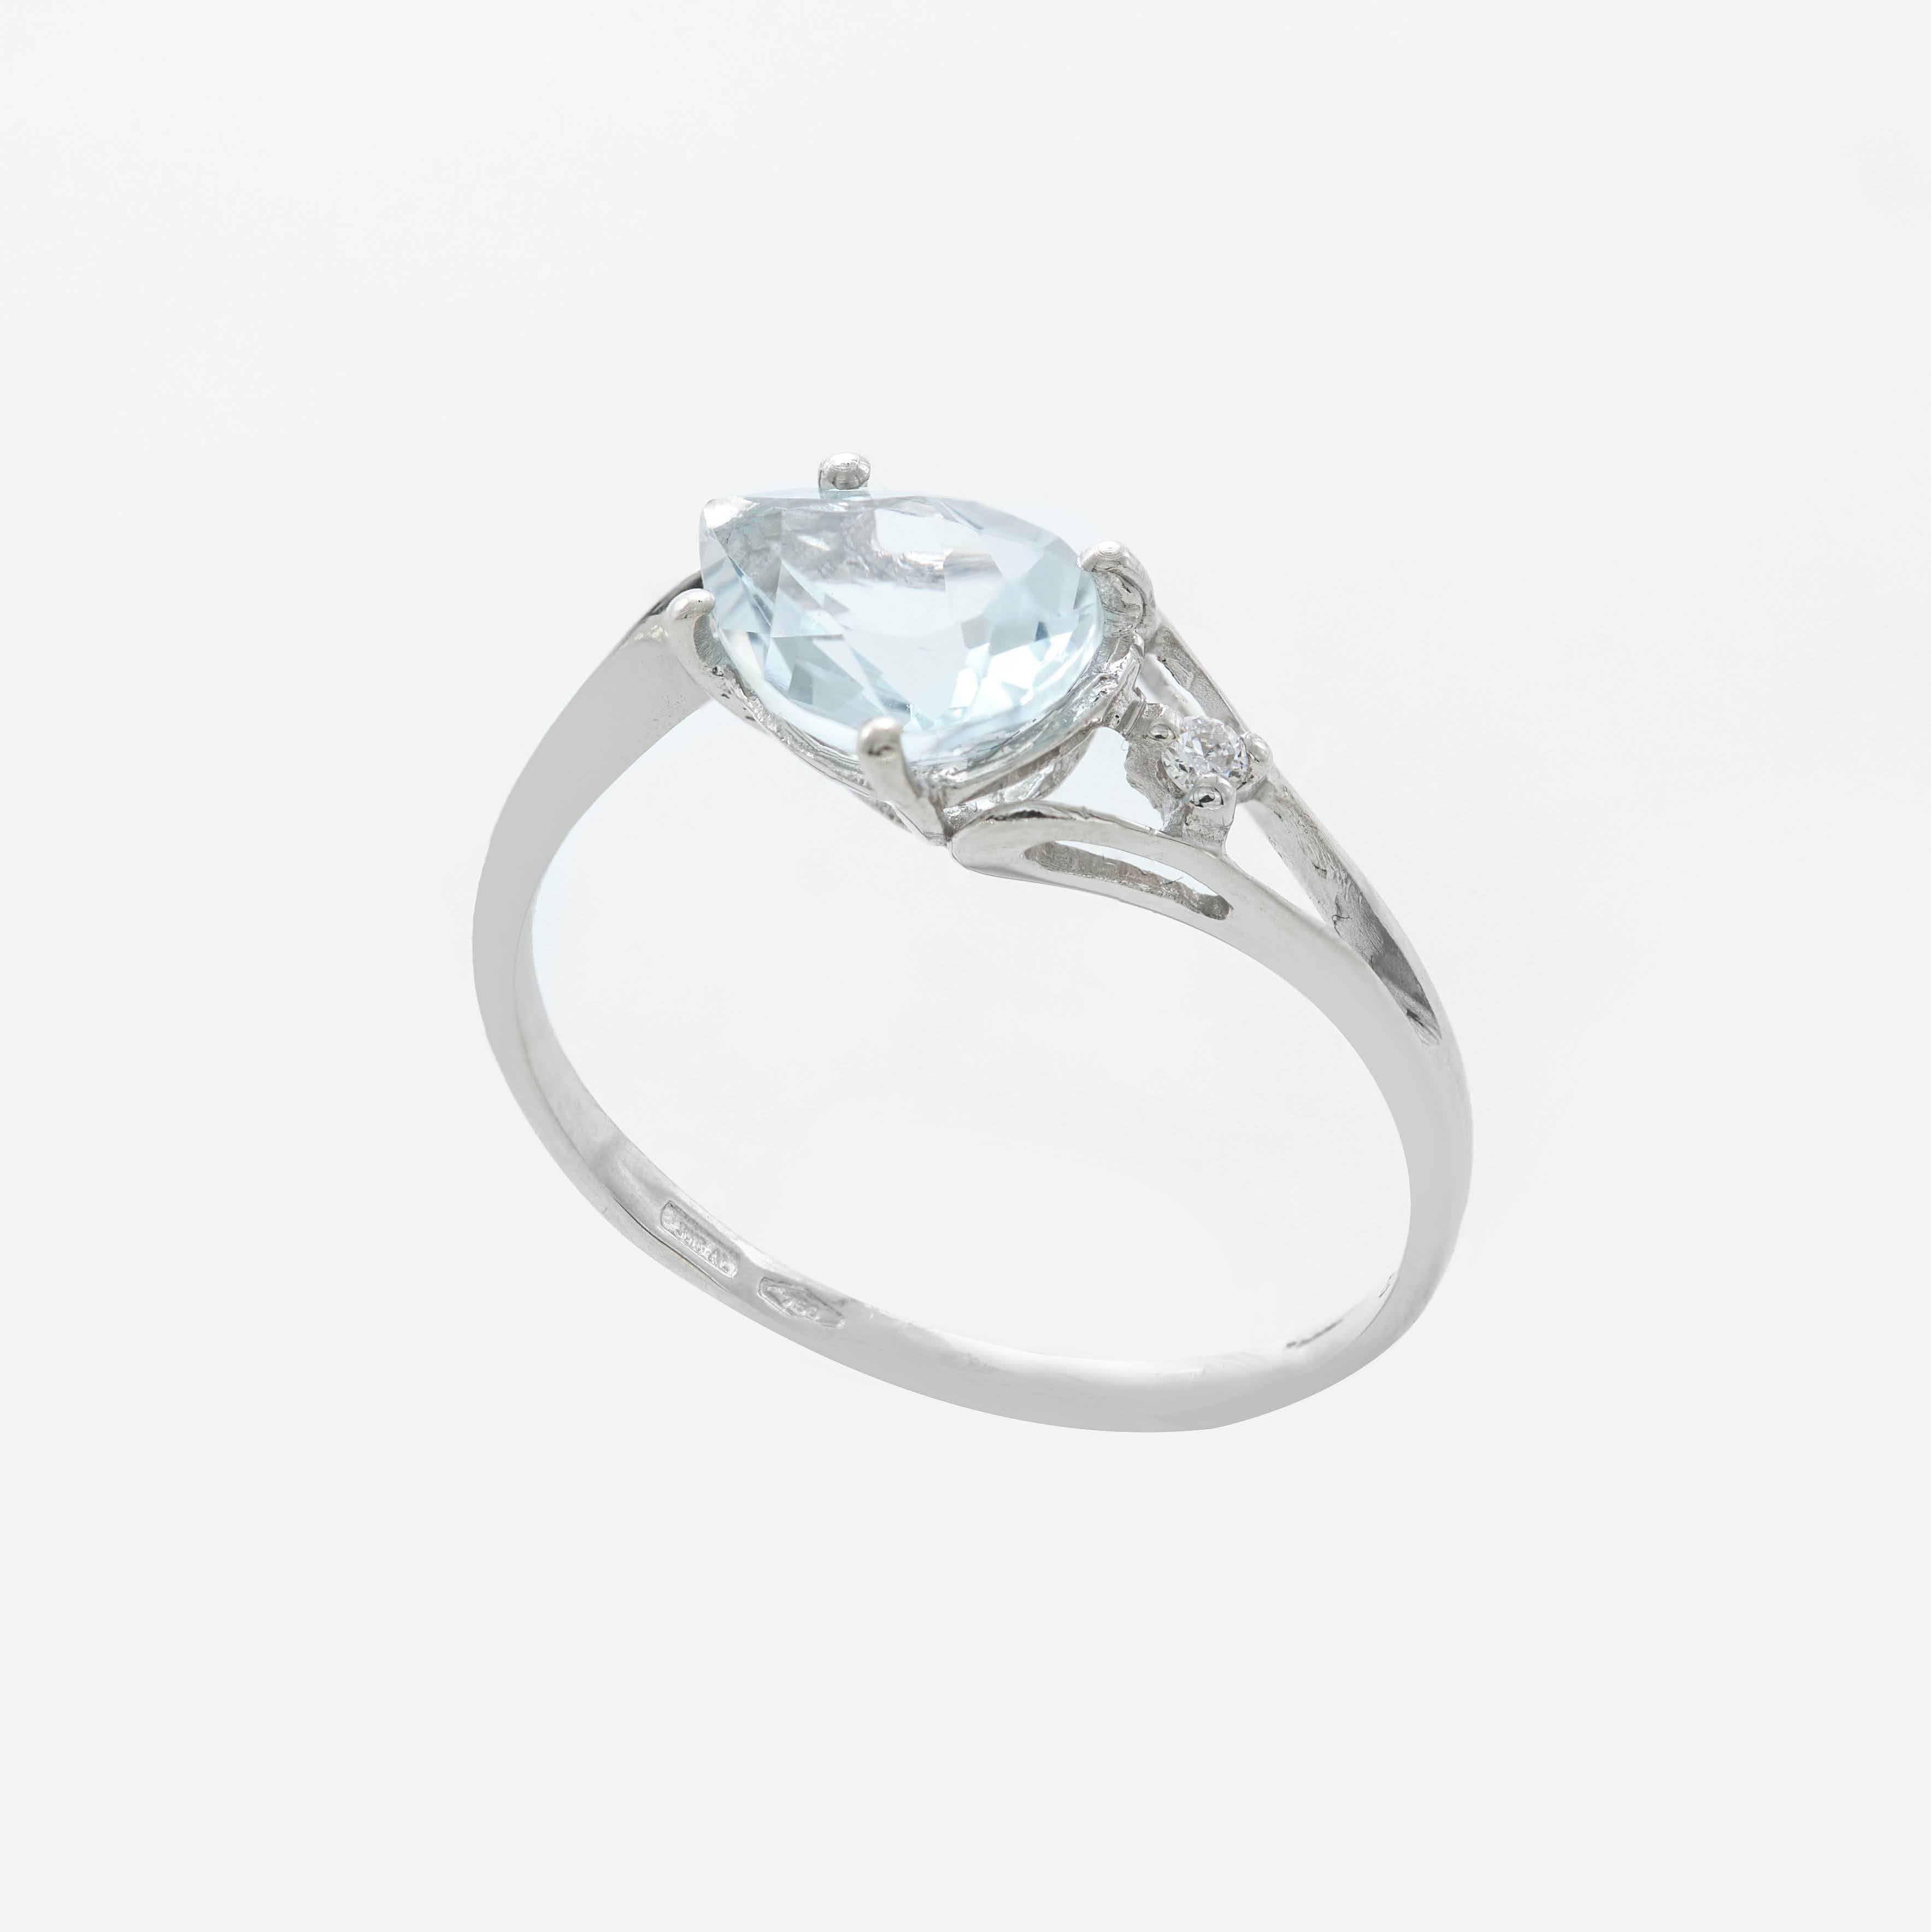 Lewis ring with aquamarine and diamonds